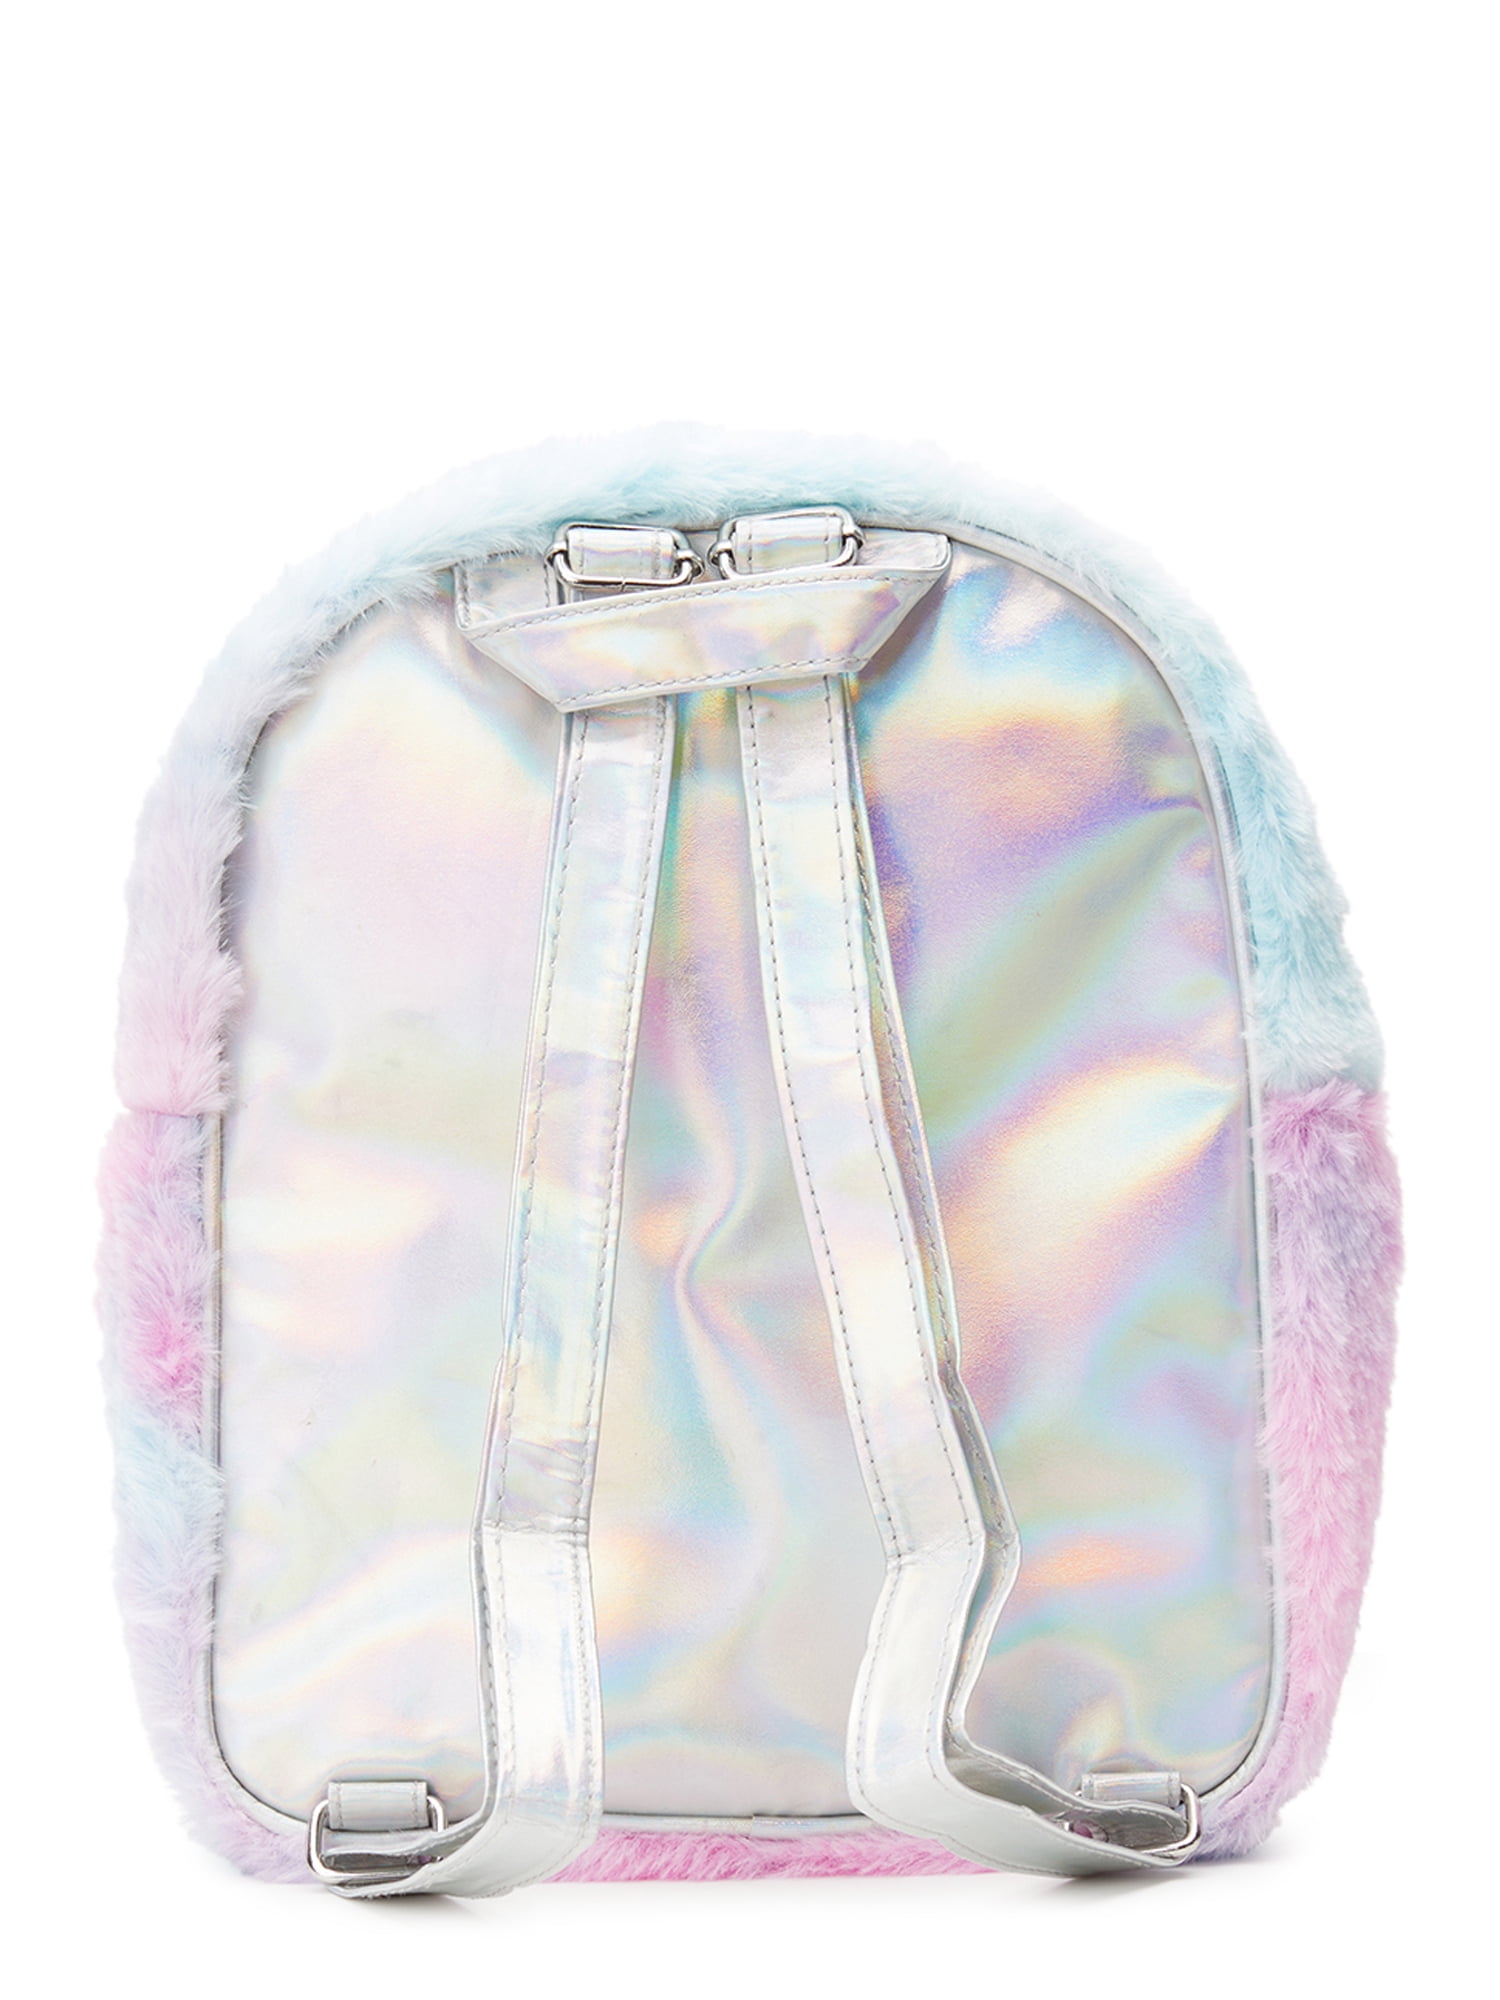 Kids Unity Unicorn Mini Backpack - Pink